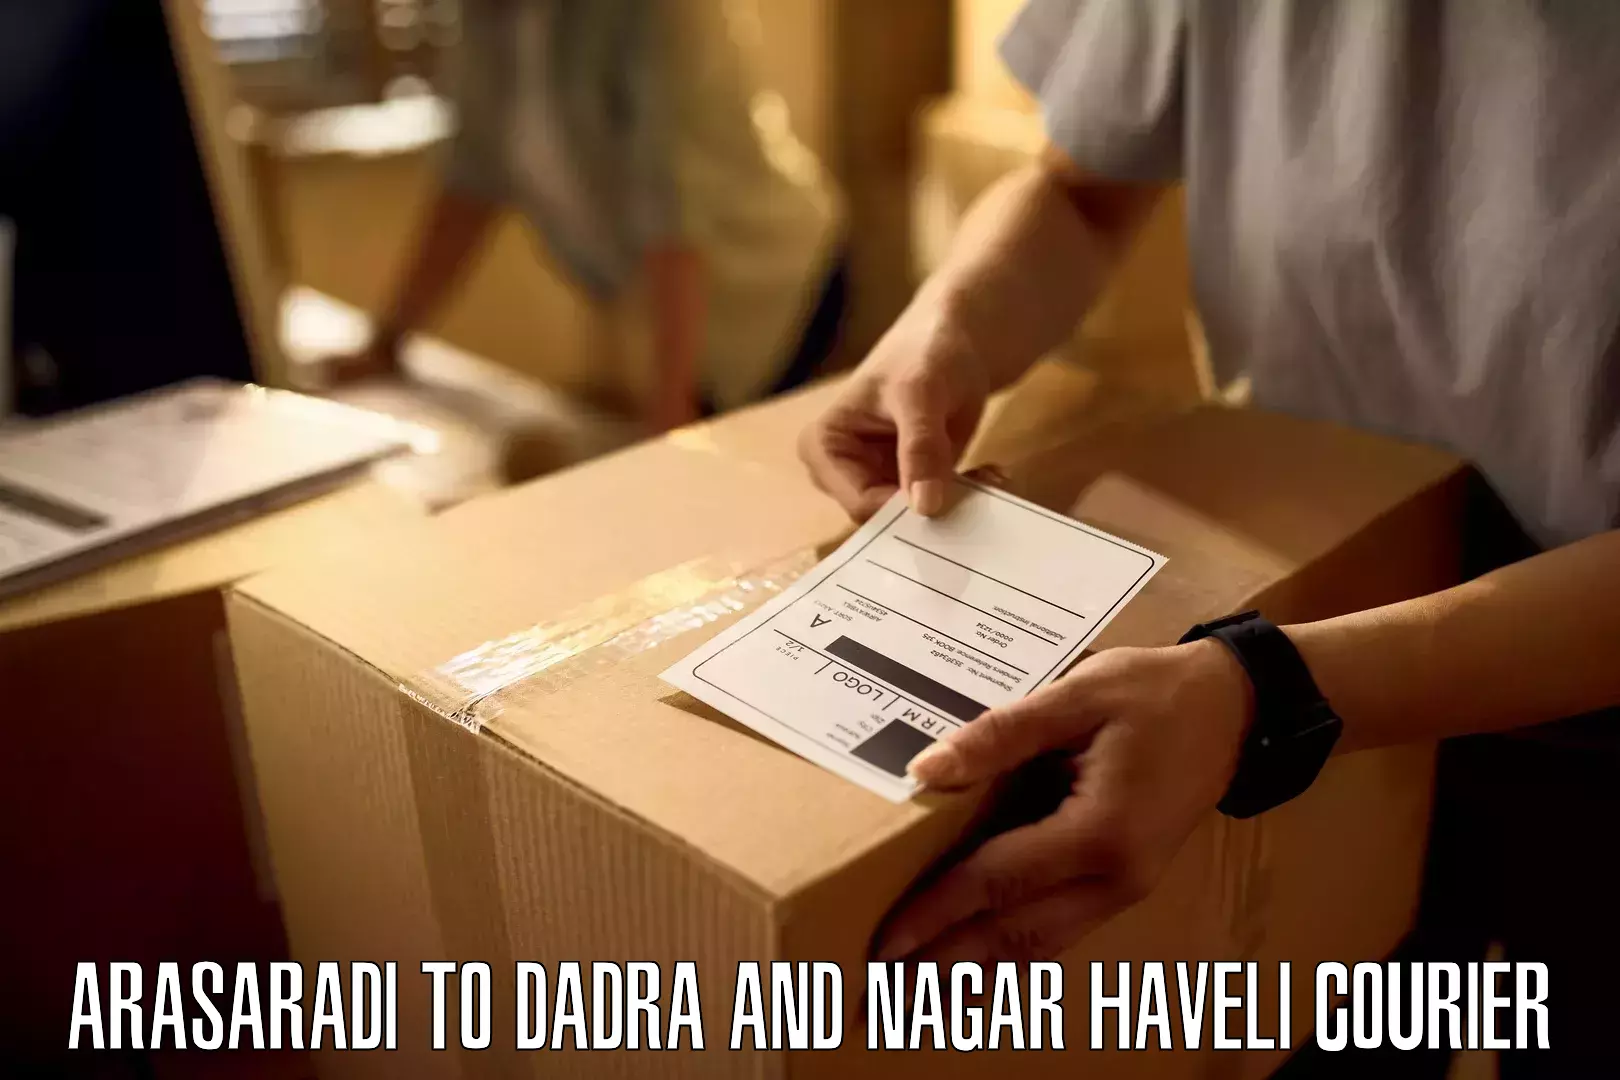 Professional courier handling Arasaradi to Dadra and Nagar Haveli